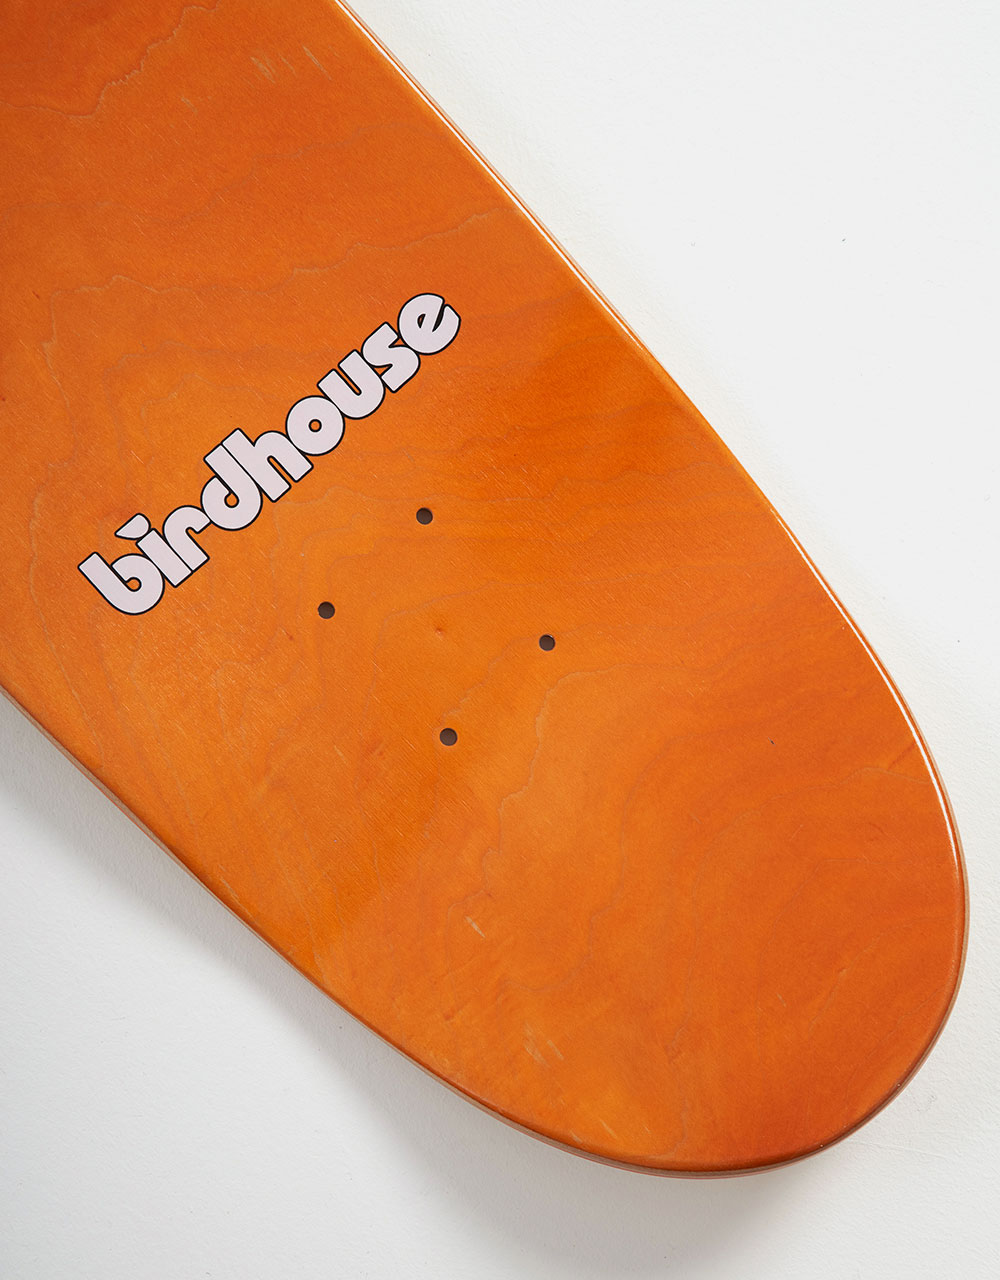 Birdhouse Team Toy Logo '90s SHAPE' Skateboard Deck - 8.5"